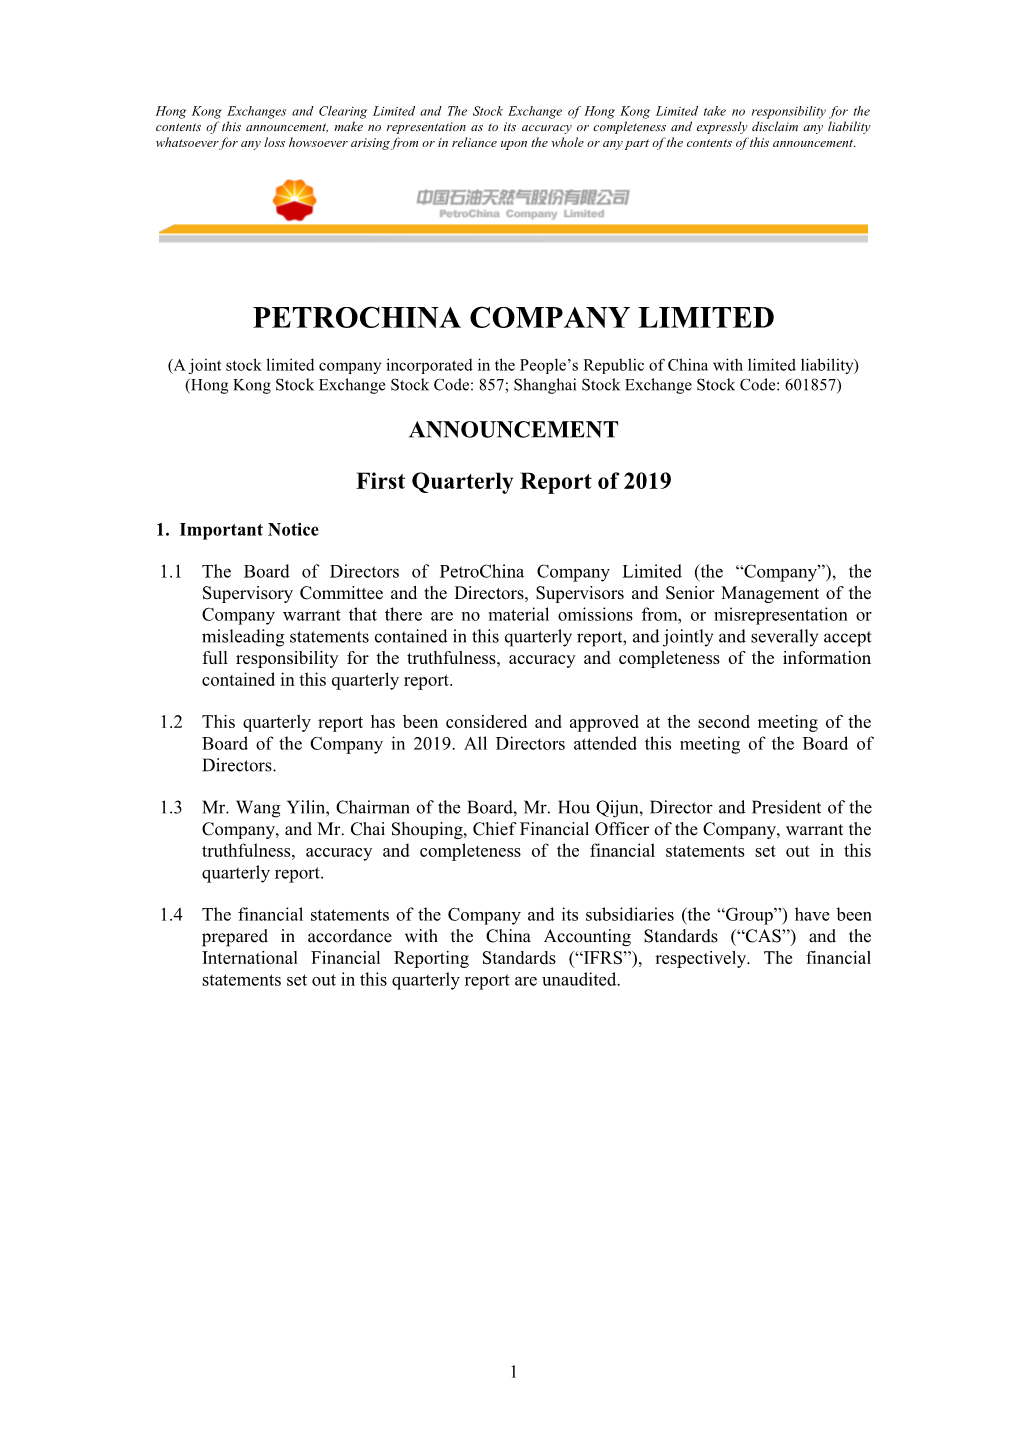 Petrochina Company Limited